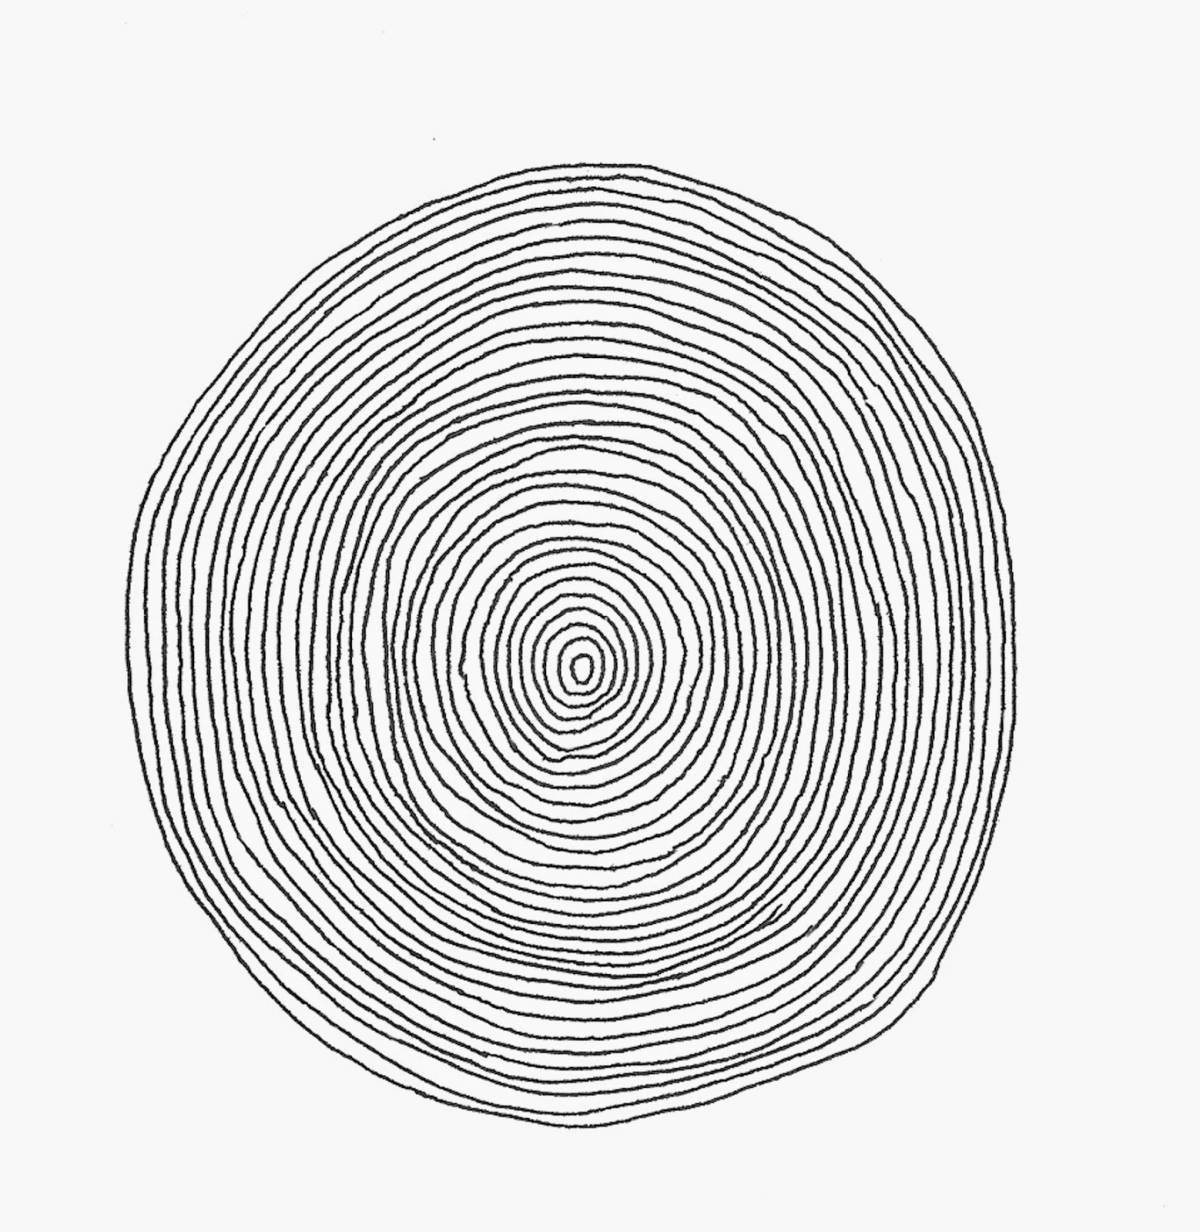 Fascinating coloring hidden spiral pattern